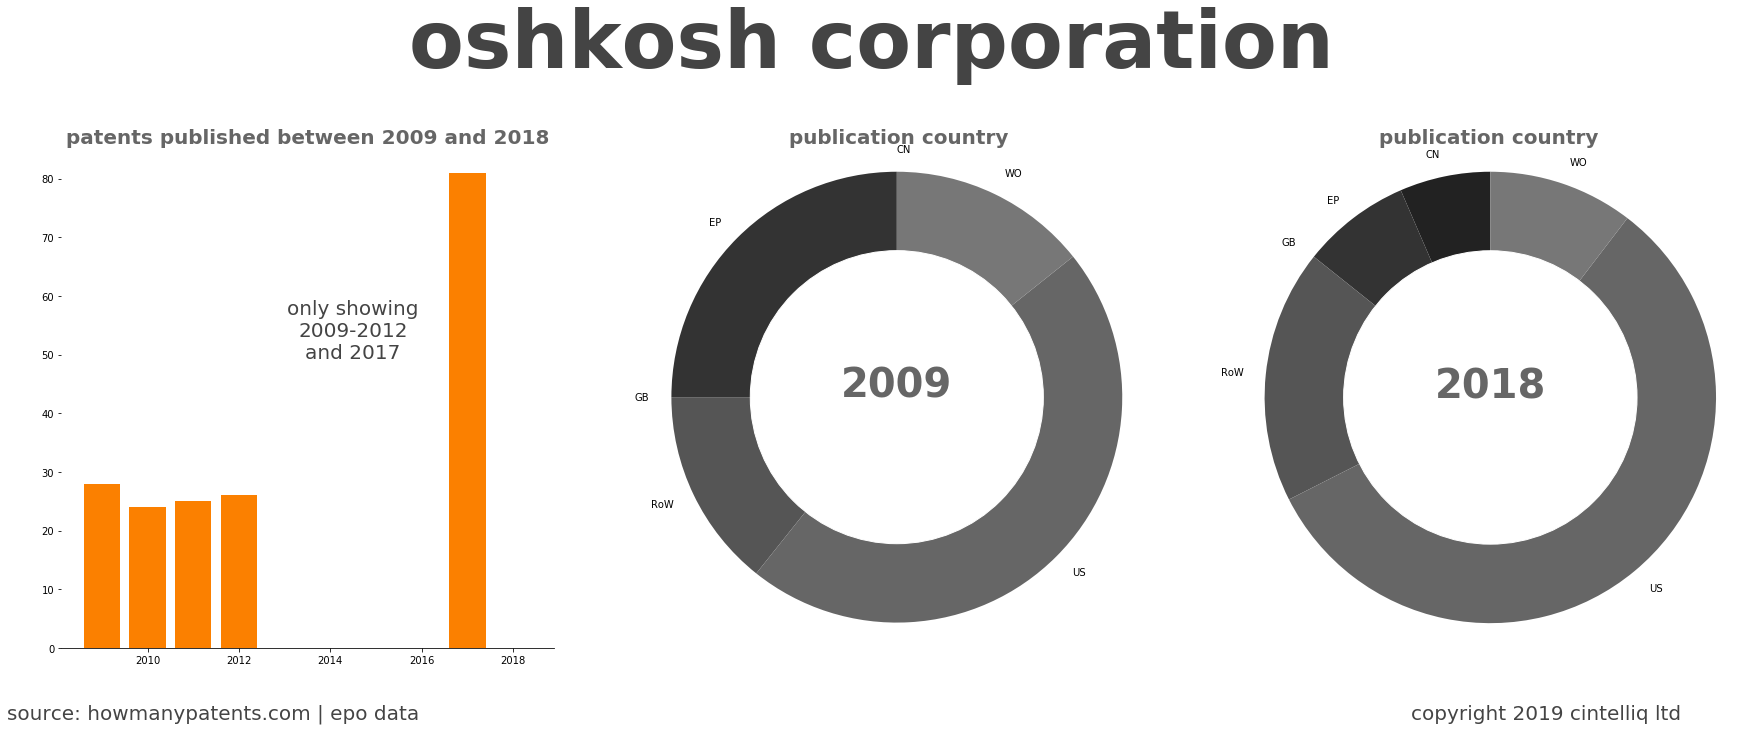 summary of patents for Oshkosh Corporation